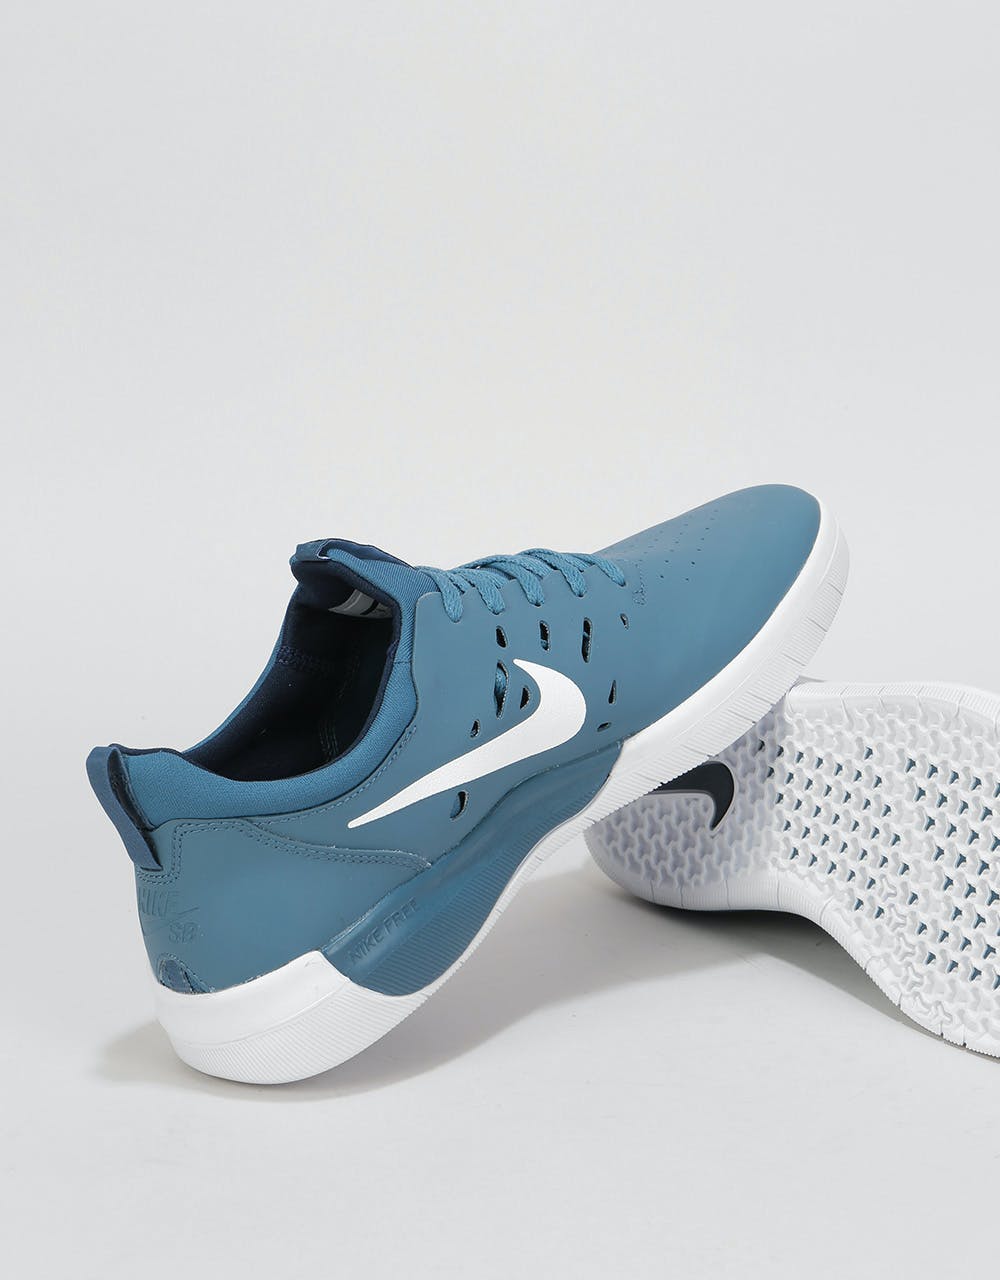 Nike SB Nyjah Free Skate Shoes - Thunderstorm/White-Obsidian